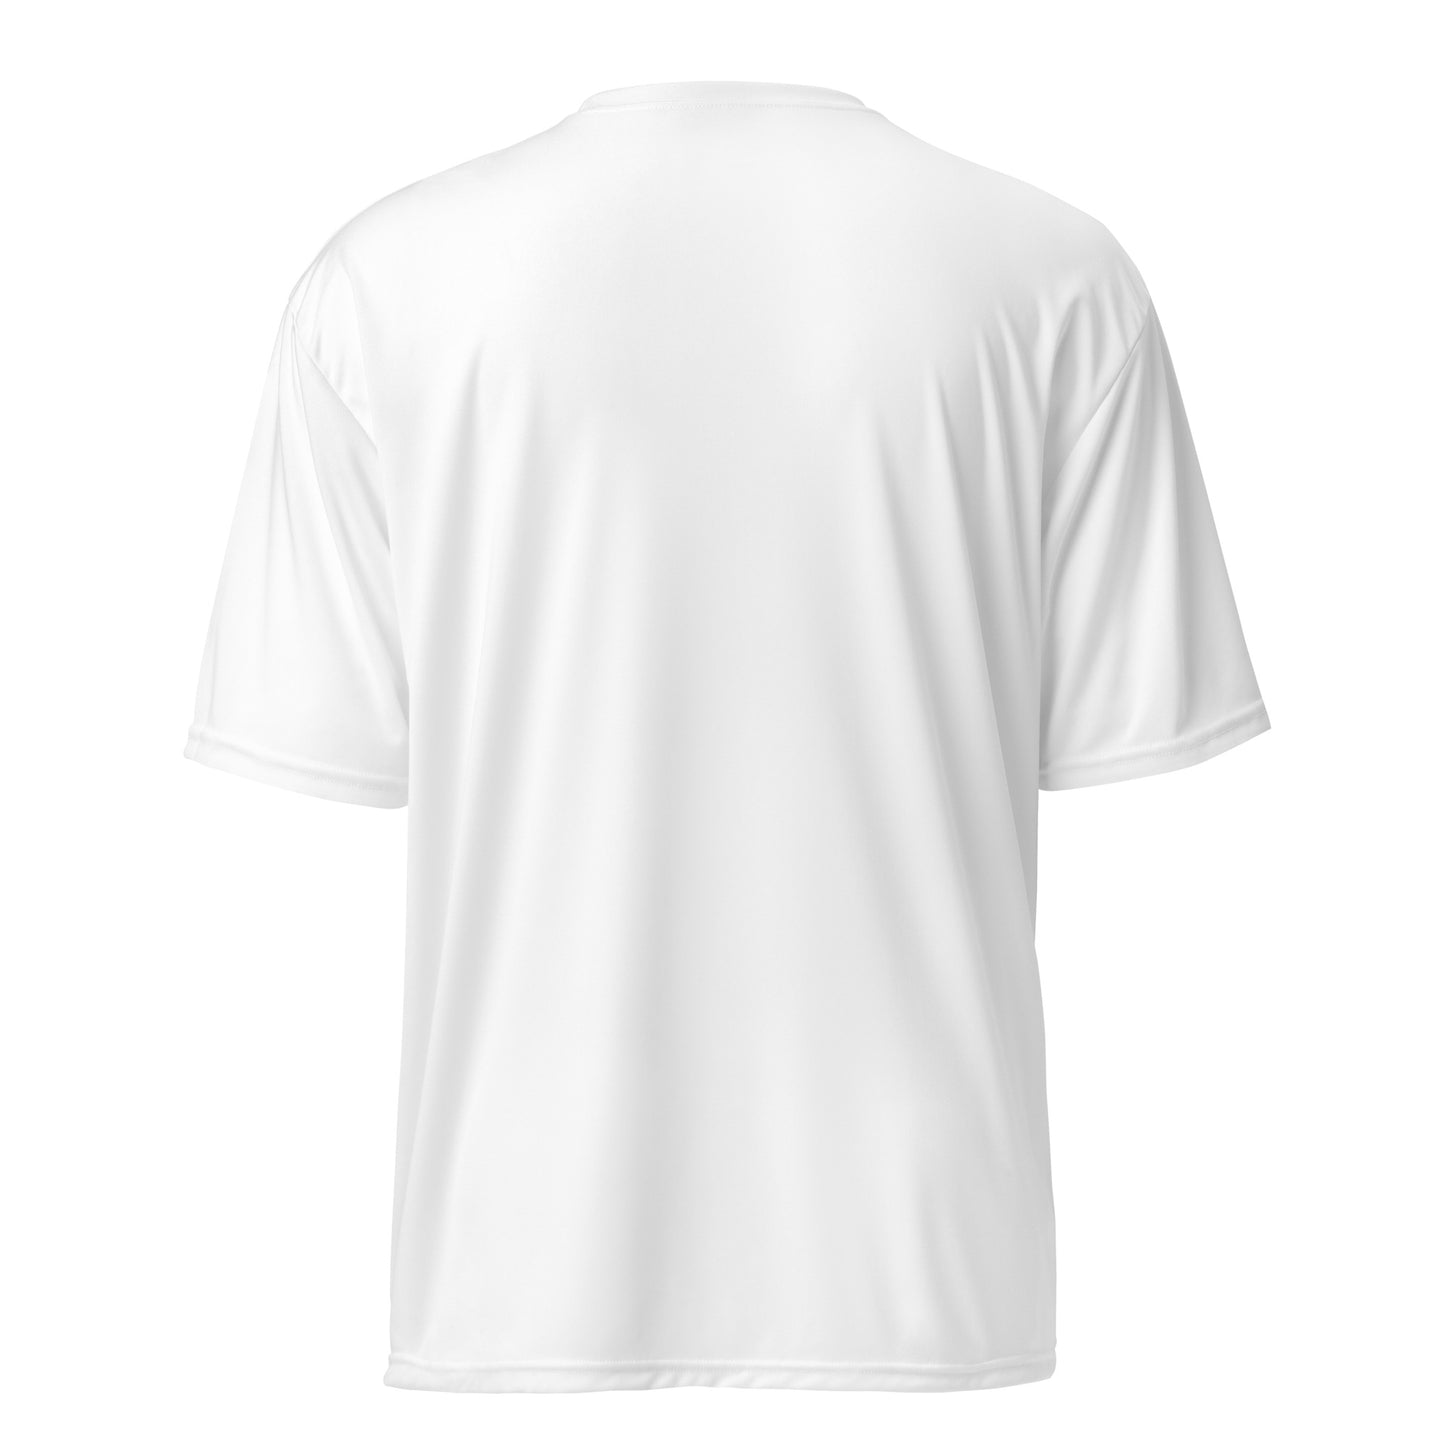 LOL Tomahawks Seal performance crew neck t-shirt